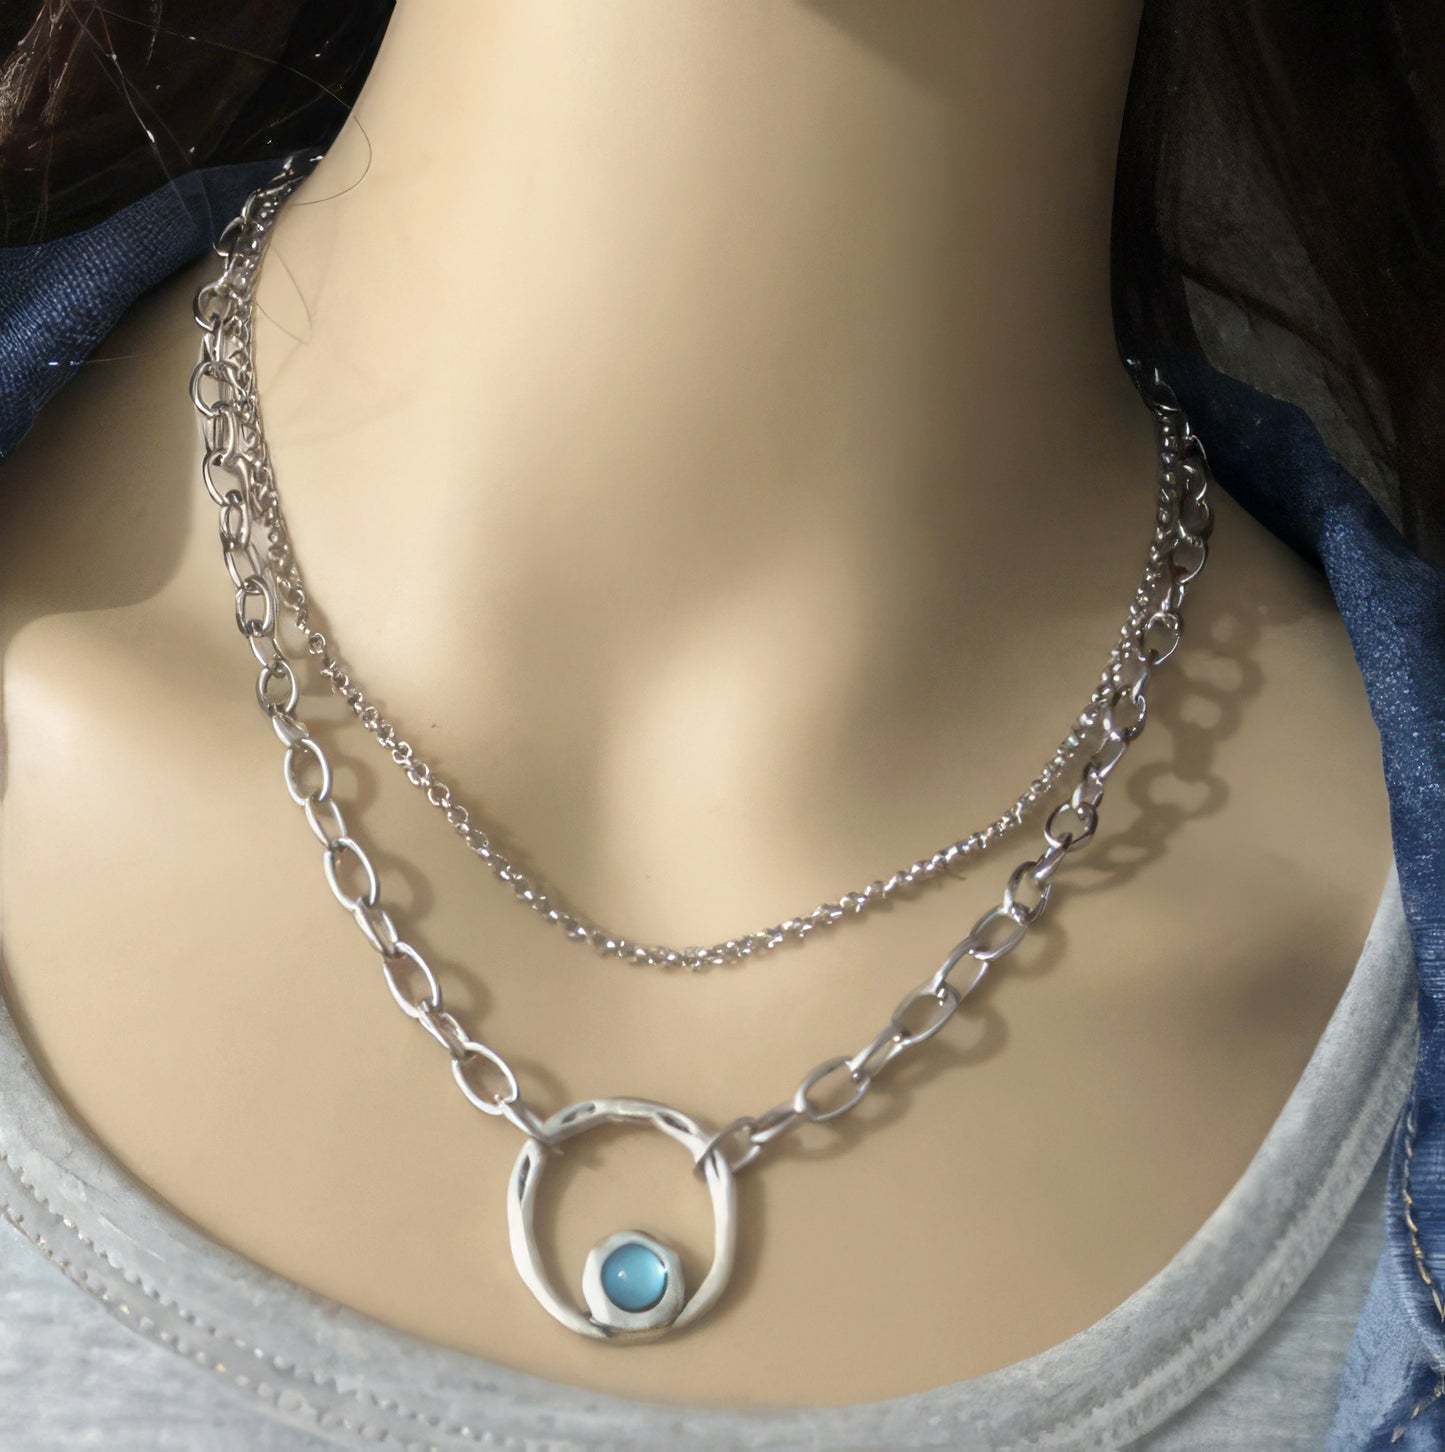 Vintage Retro Round Chain Necklace in Blue